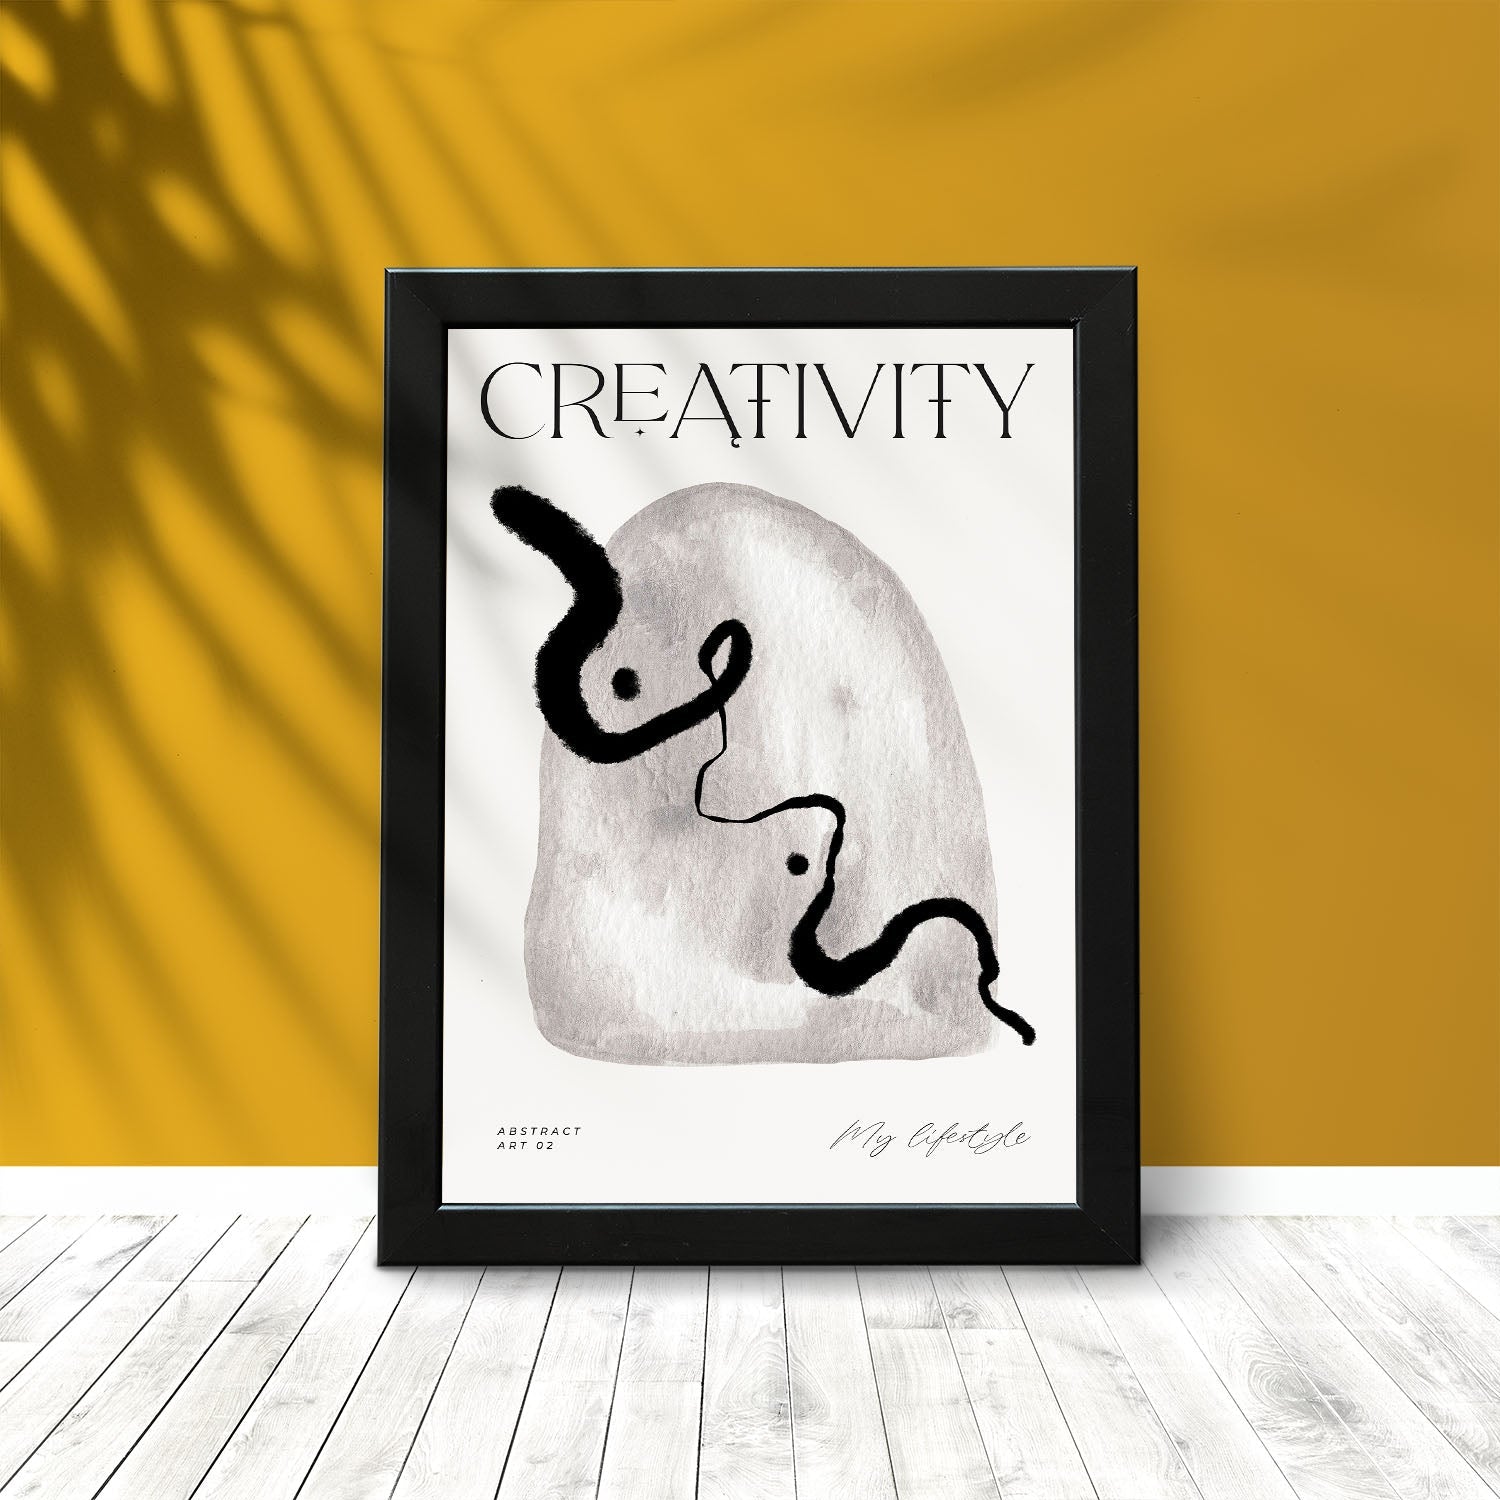 Creativity-Artwork-Nacnic-Nacnic Estudio SL